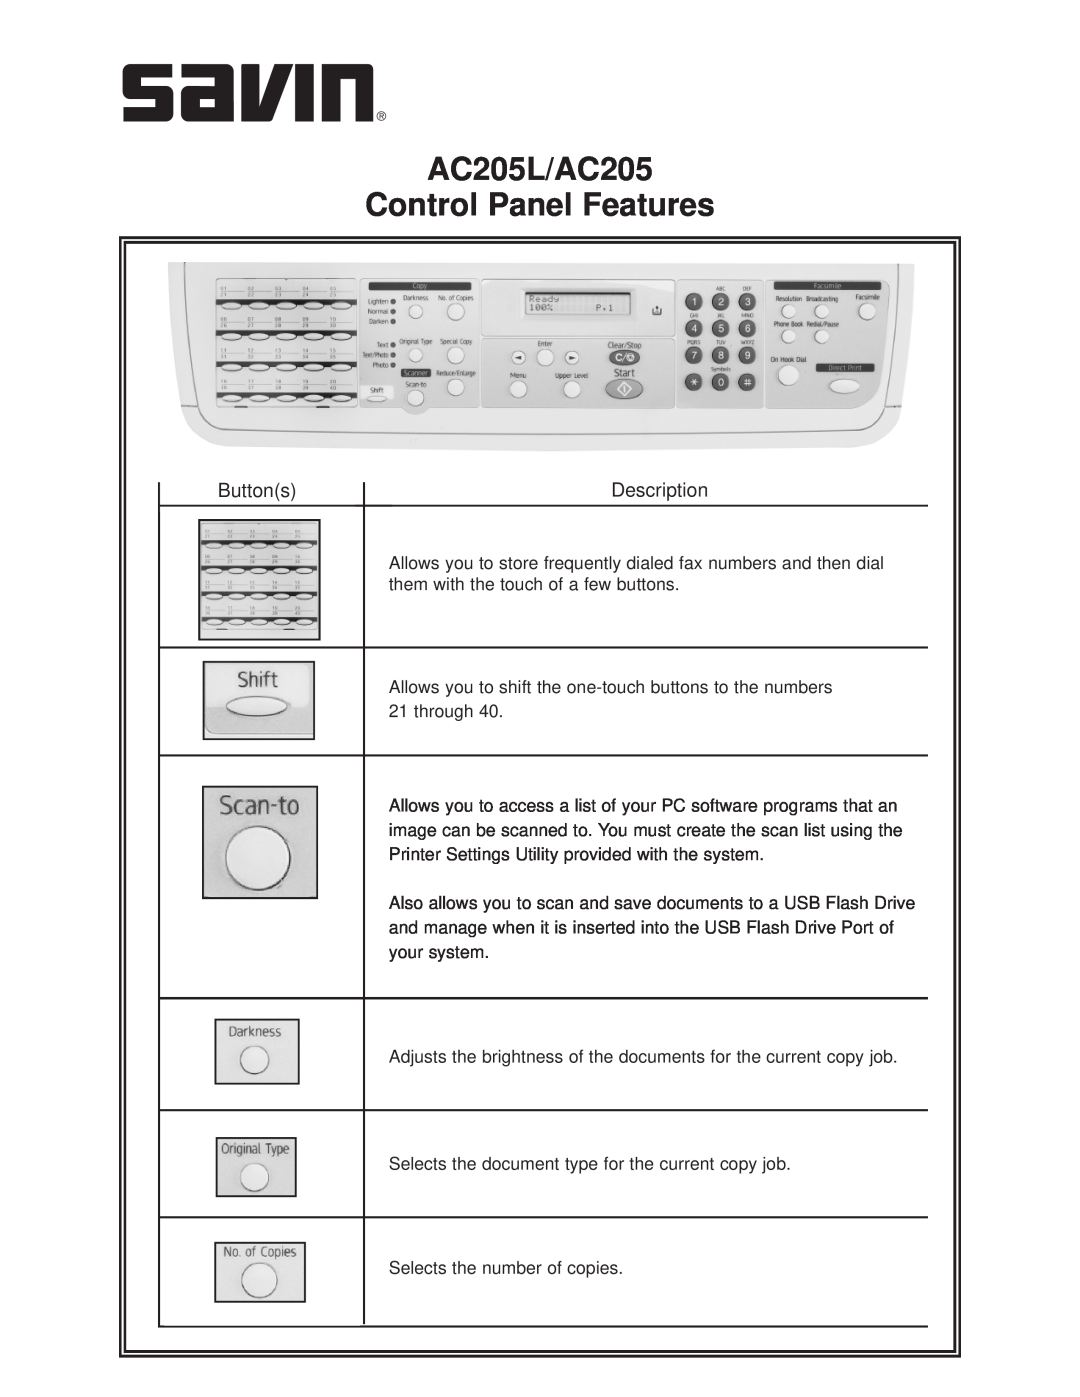 Savin manual AC205L/AC205 Control Panel Features, Buttons, Description 